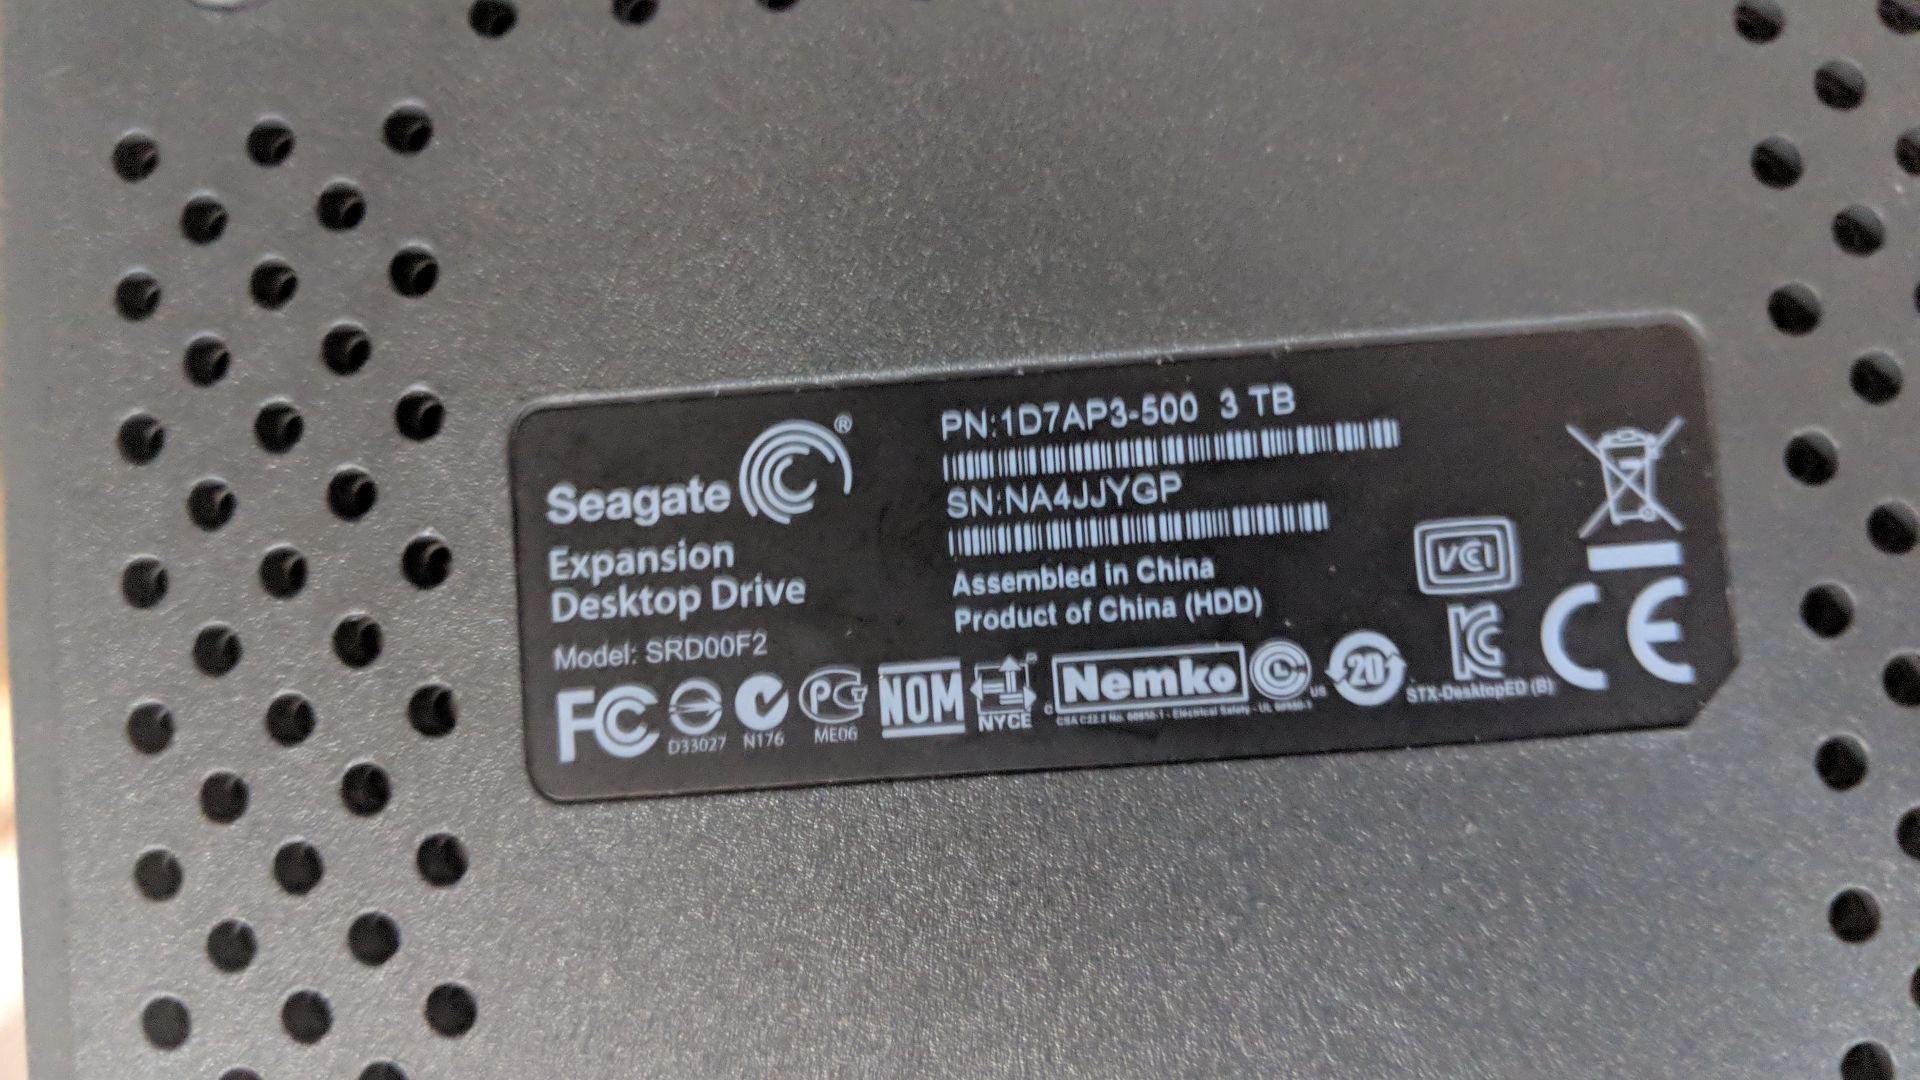 Seagate 3Tb expansion desktop drive model SRD00F2 - Image 4 of 4